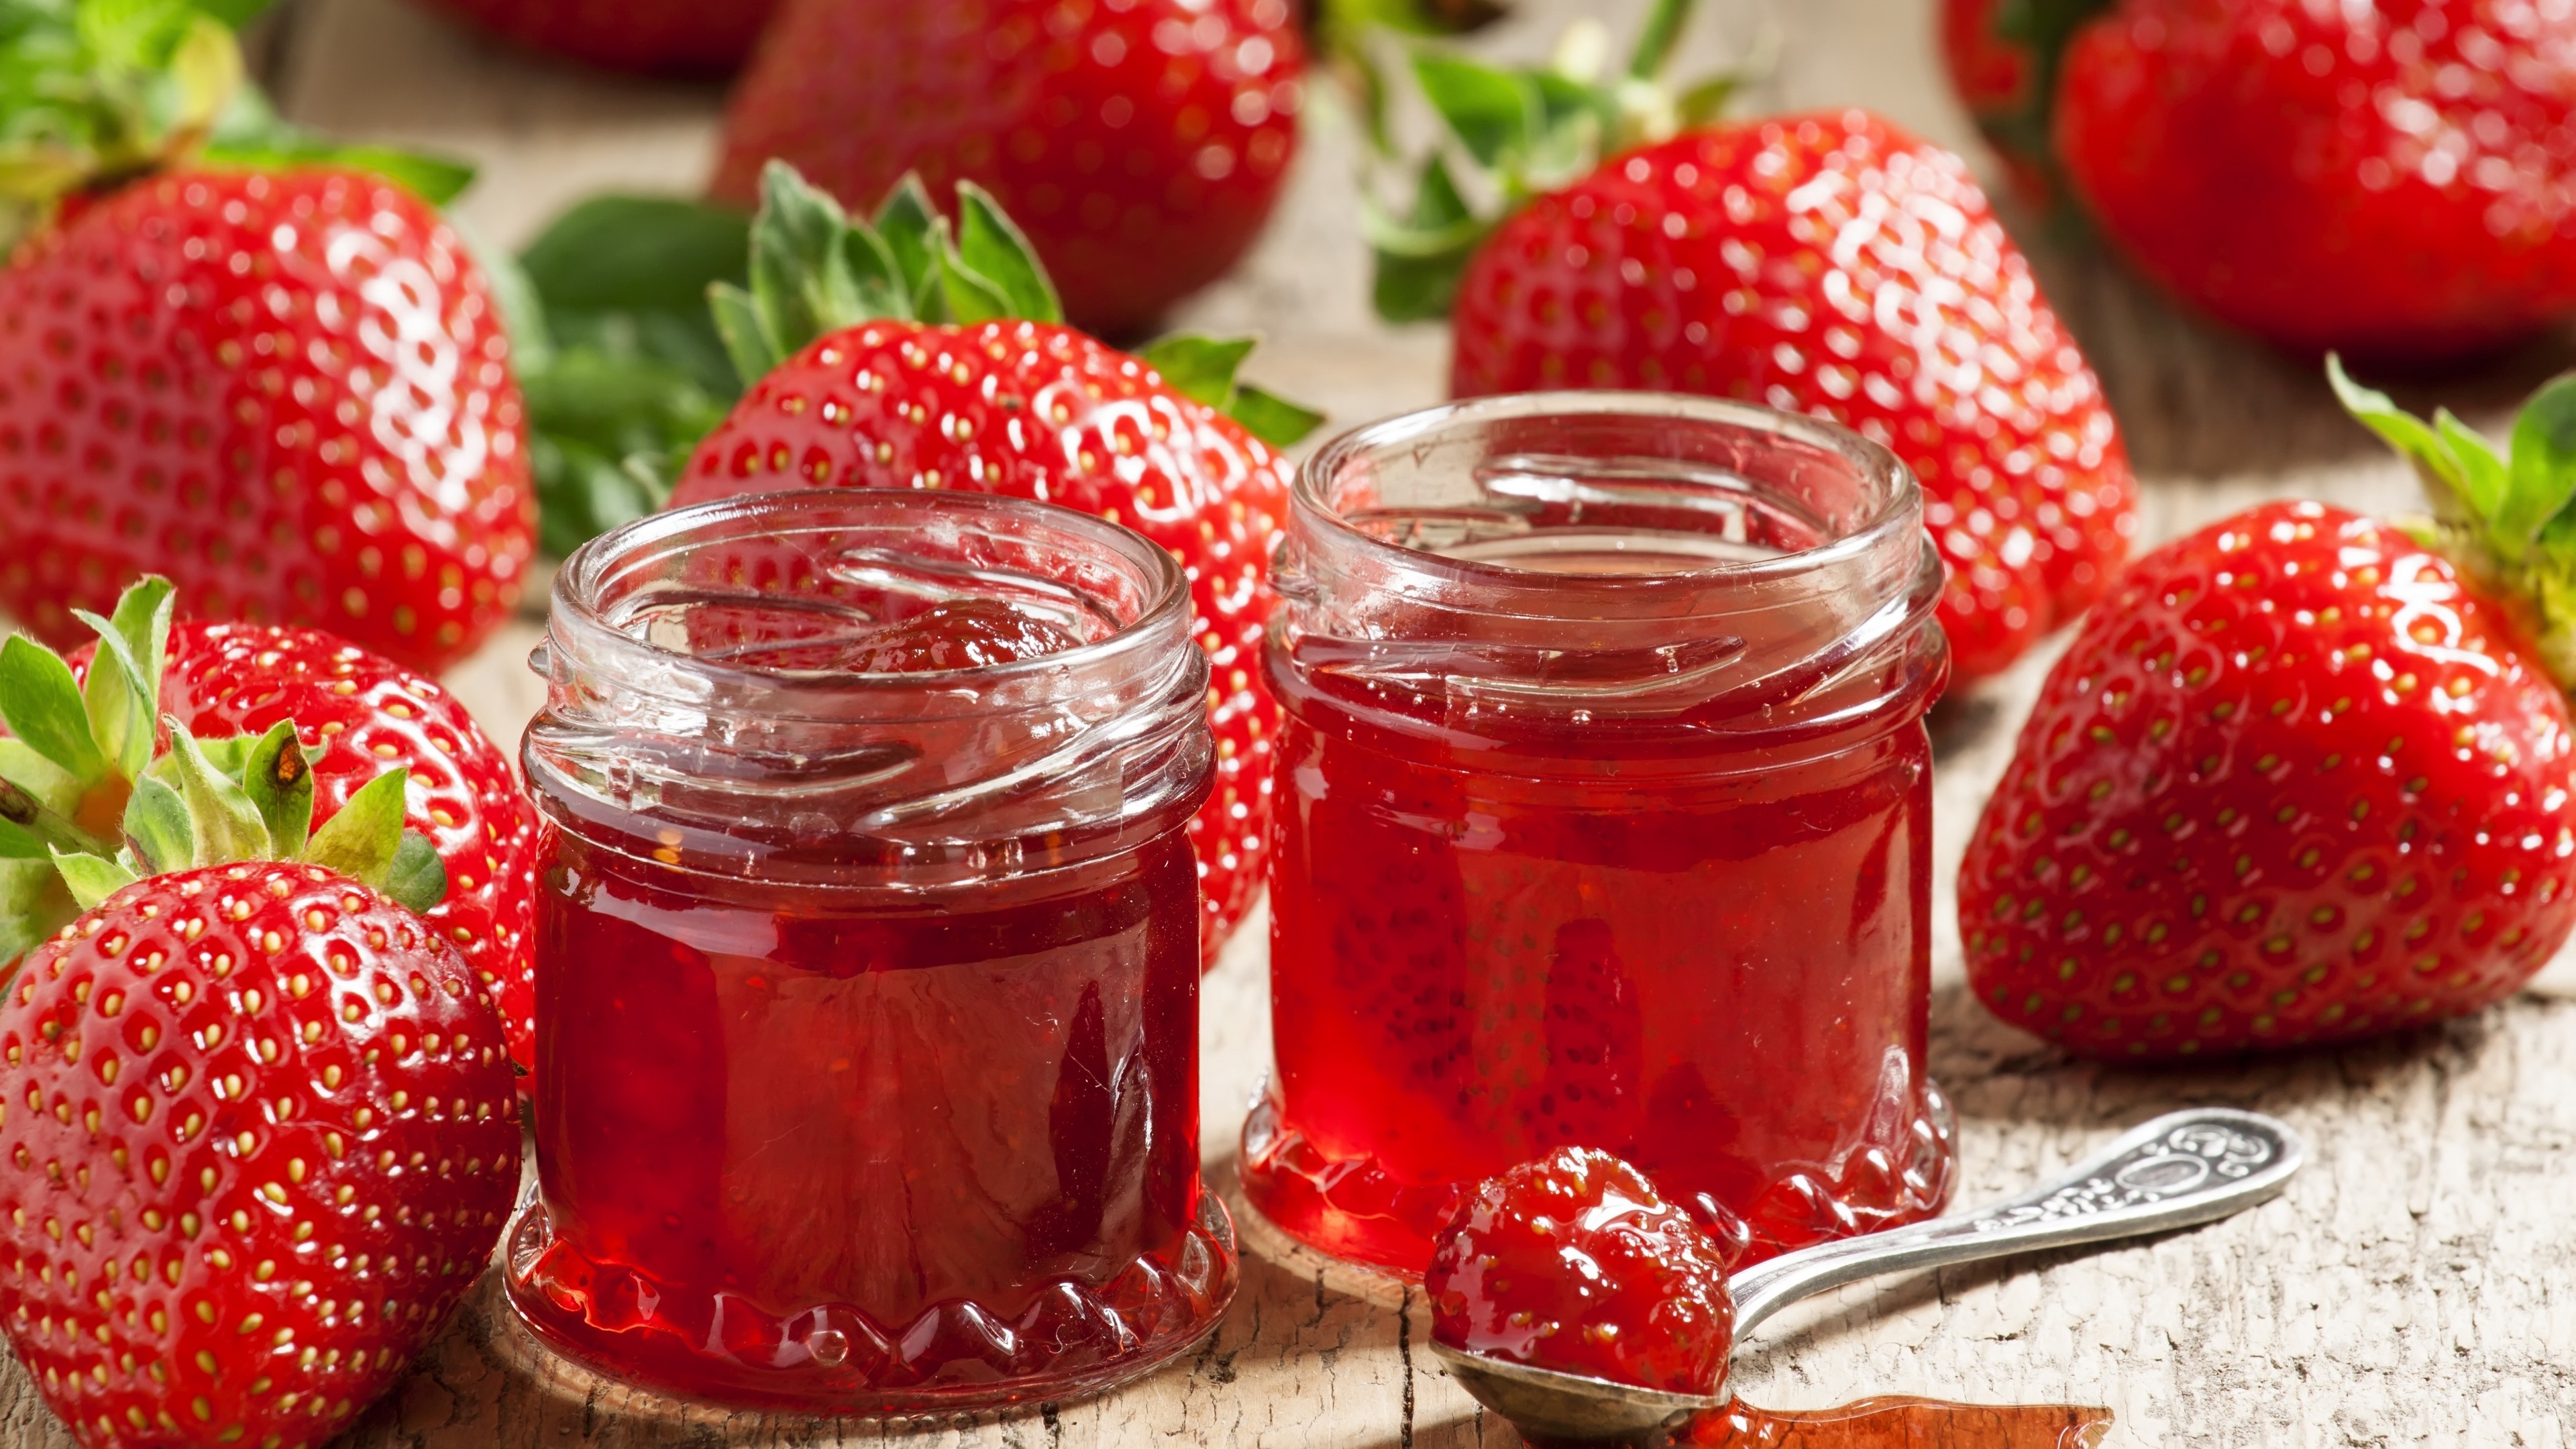 Jam, Strawberry jam wallpaper, Fruitful indulgence, Homemade goodness, 3840x2160 4K Desktop